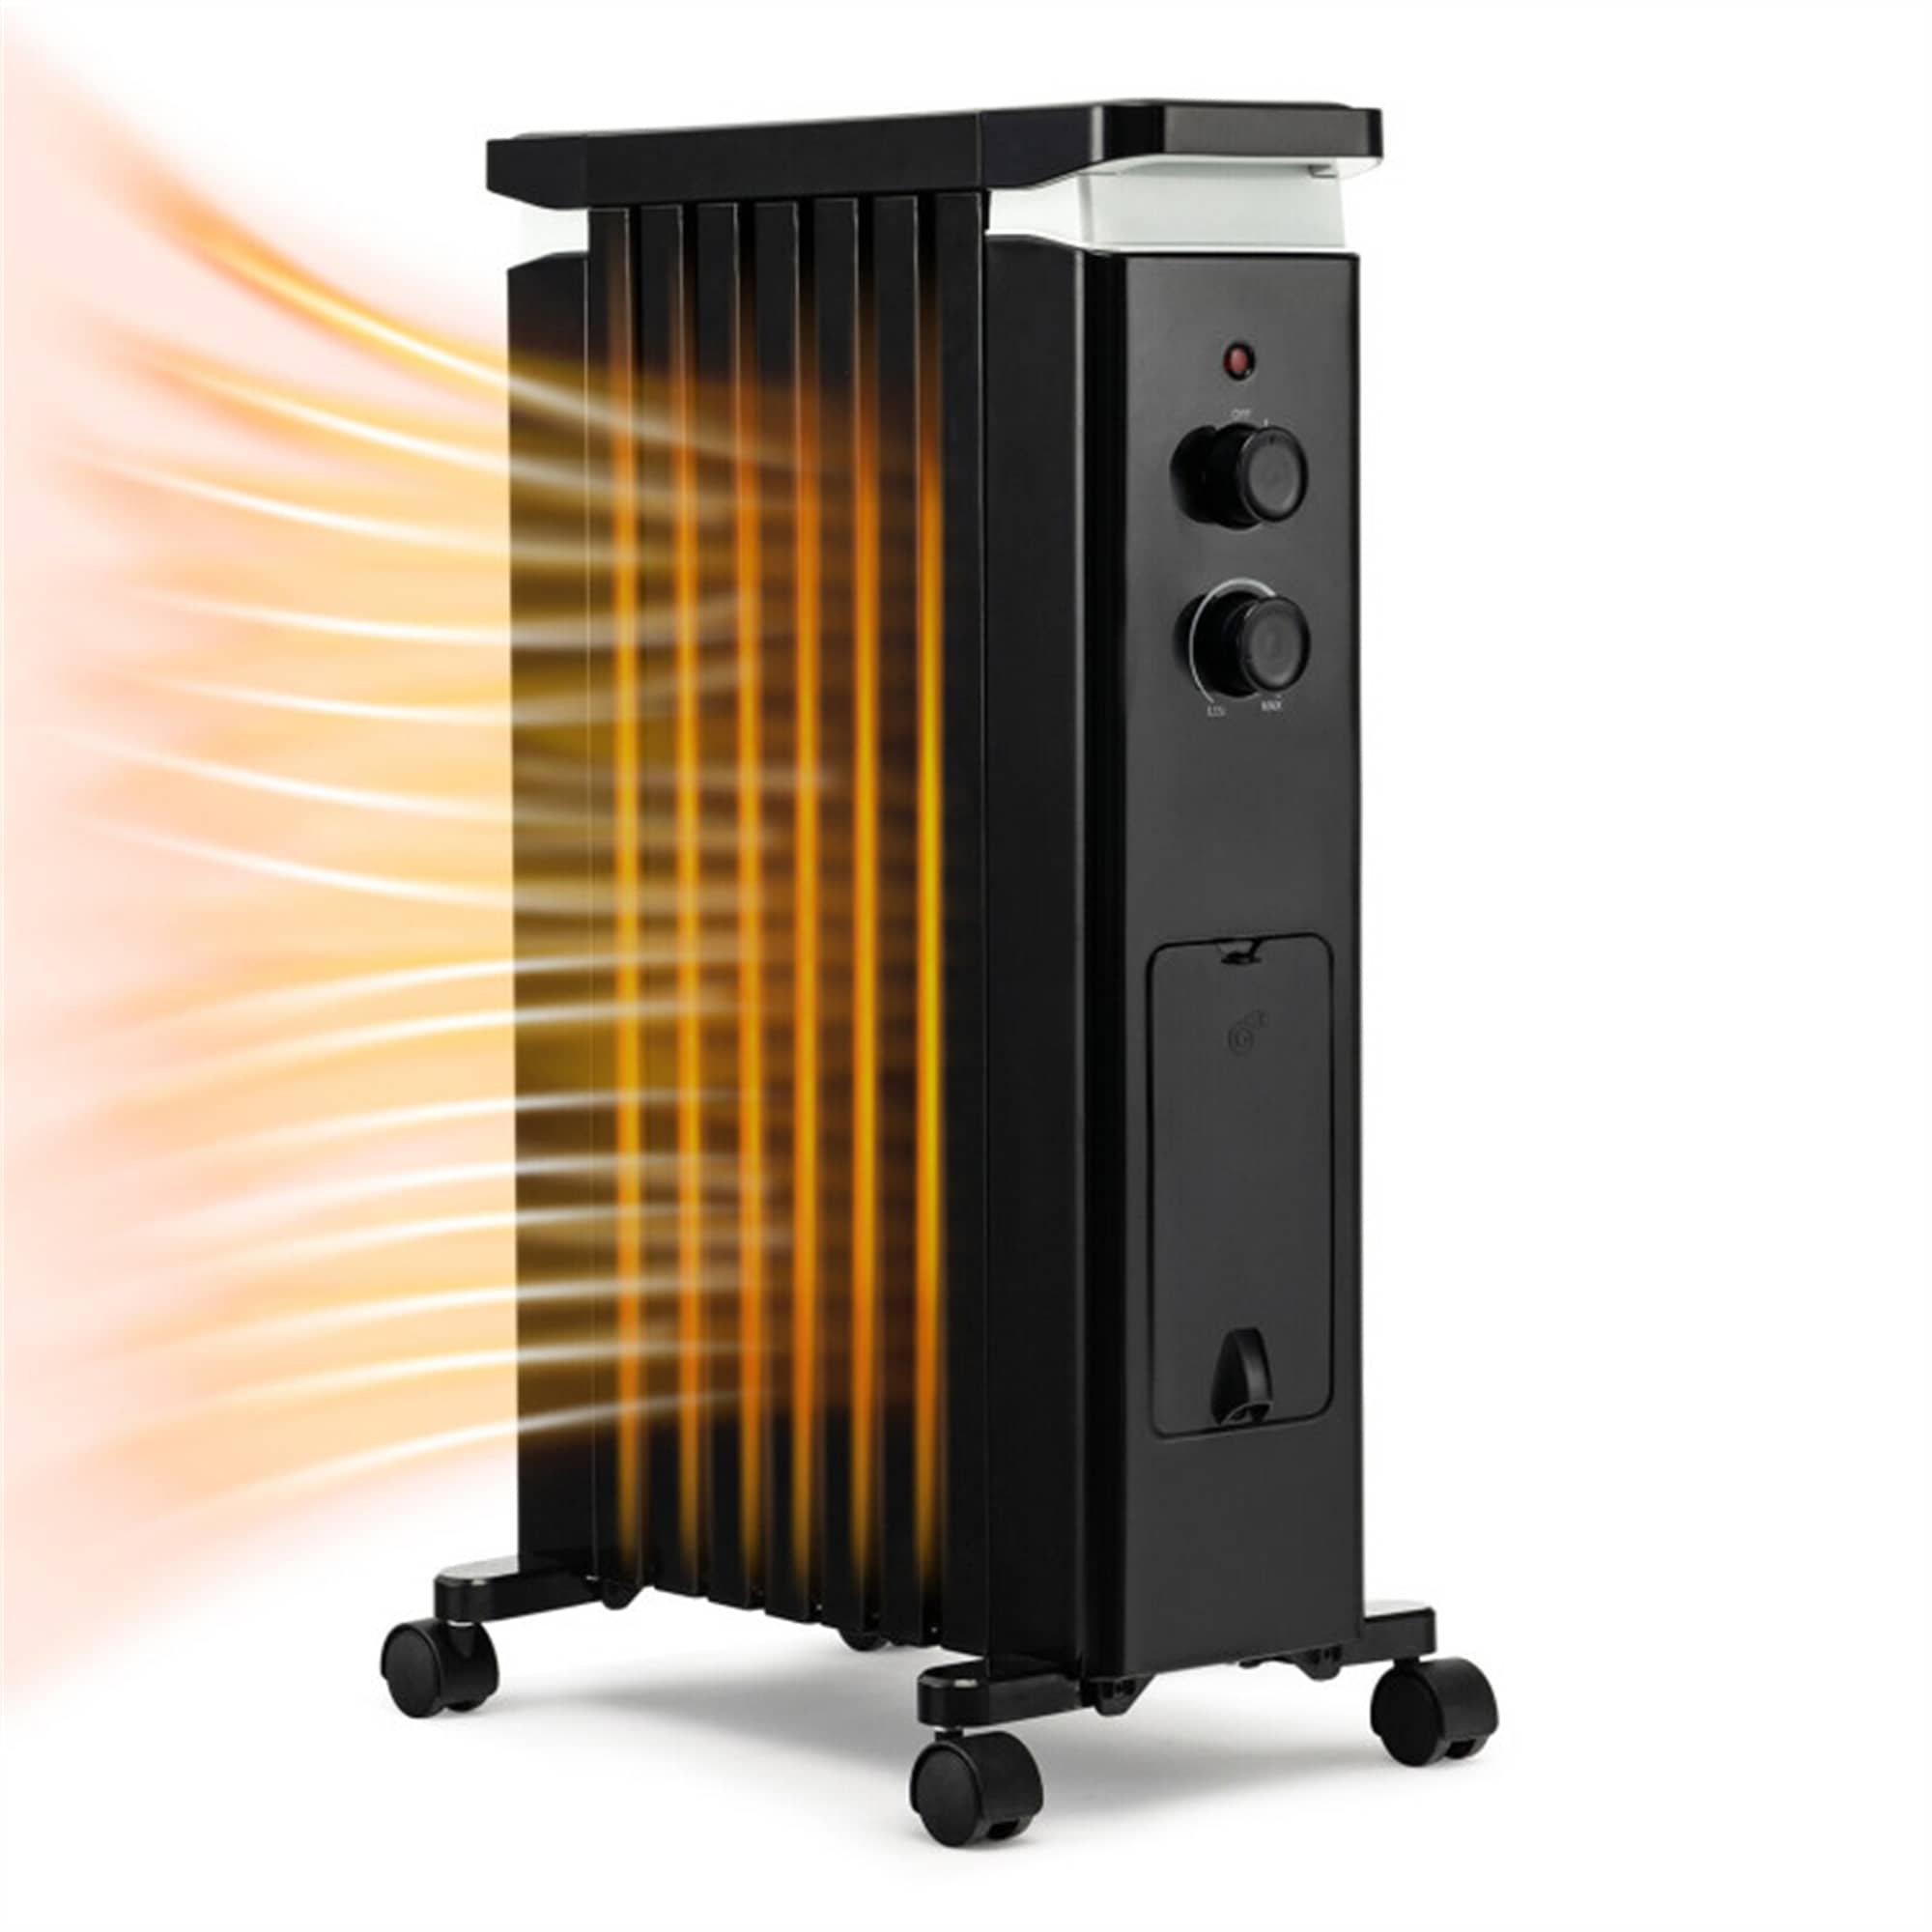 CASAINC 1500W Portable Oil Filled Radiator Heater with 3 Heat Settings